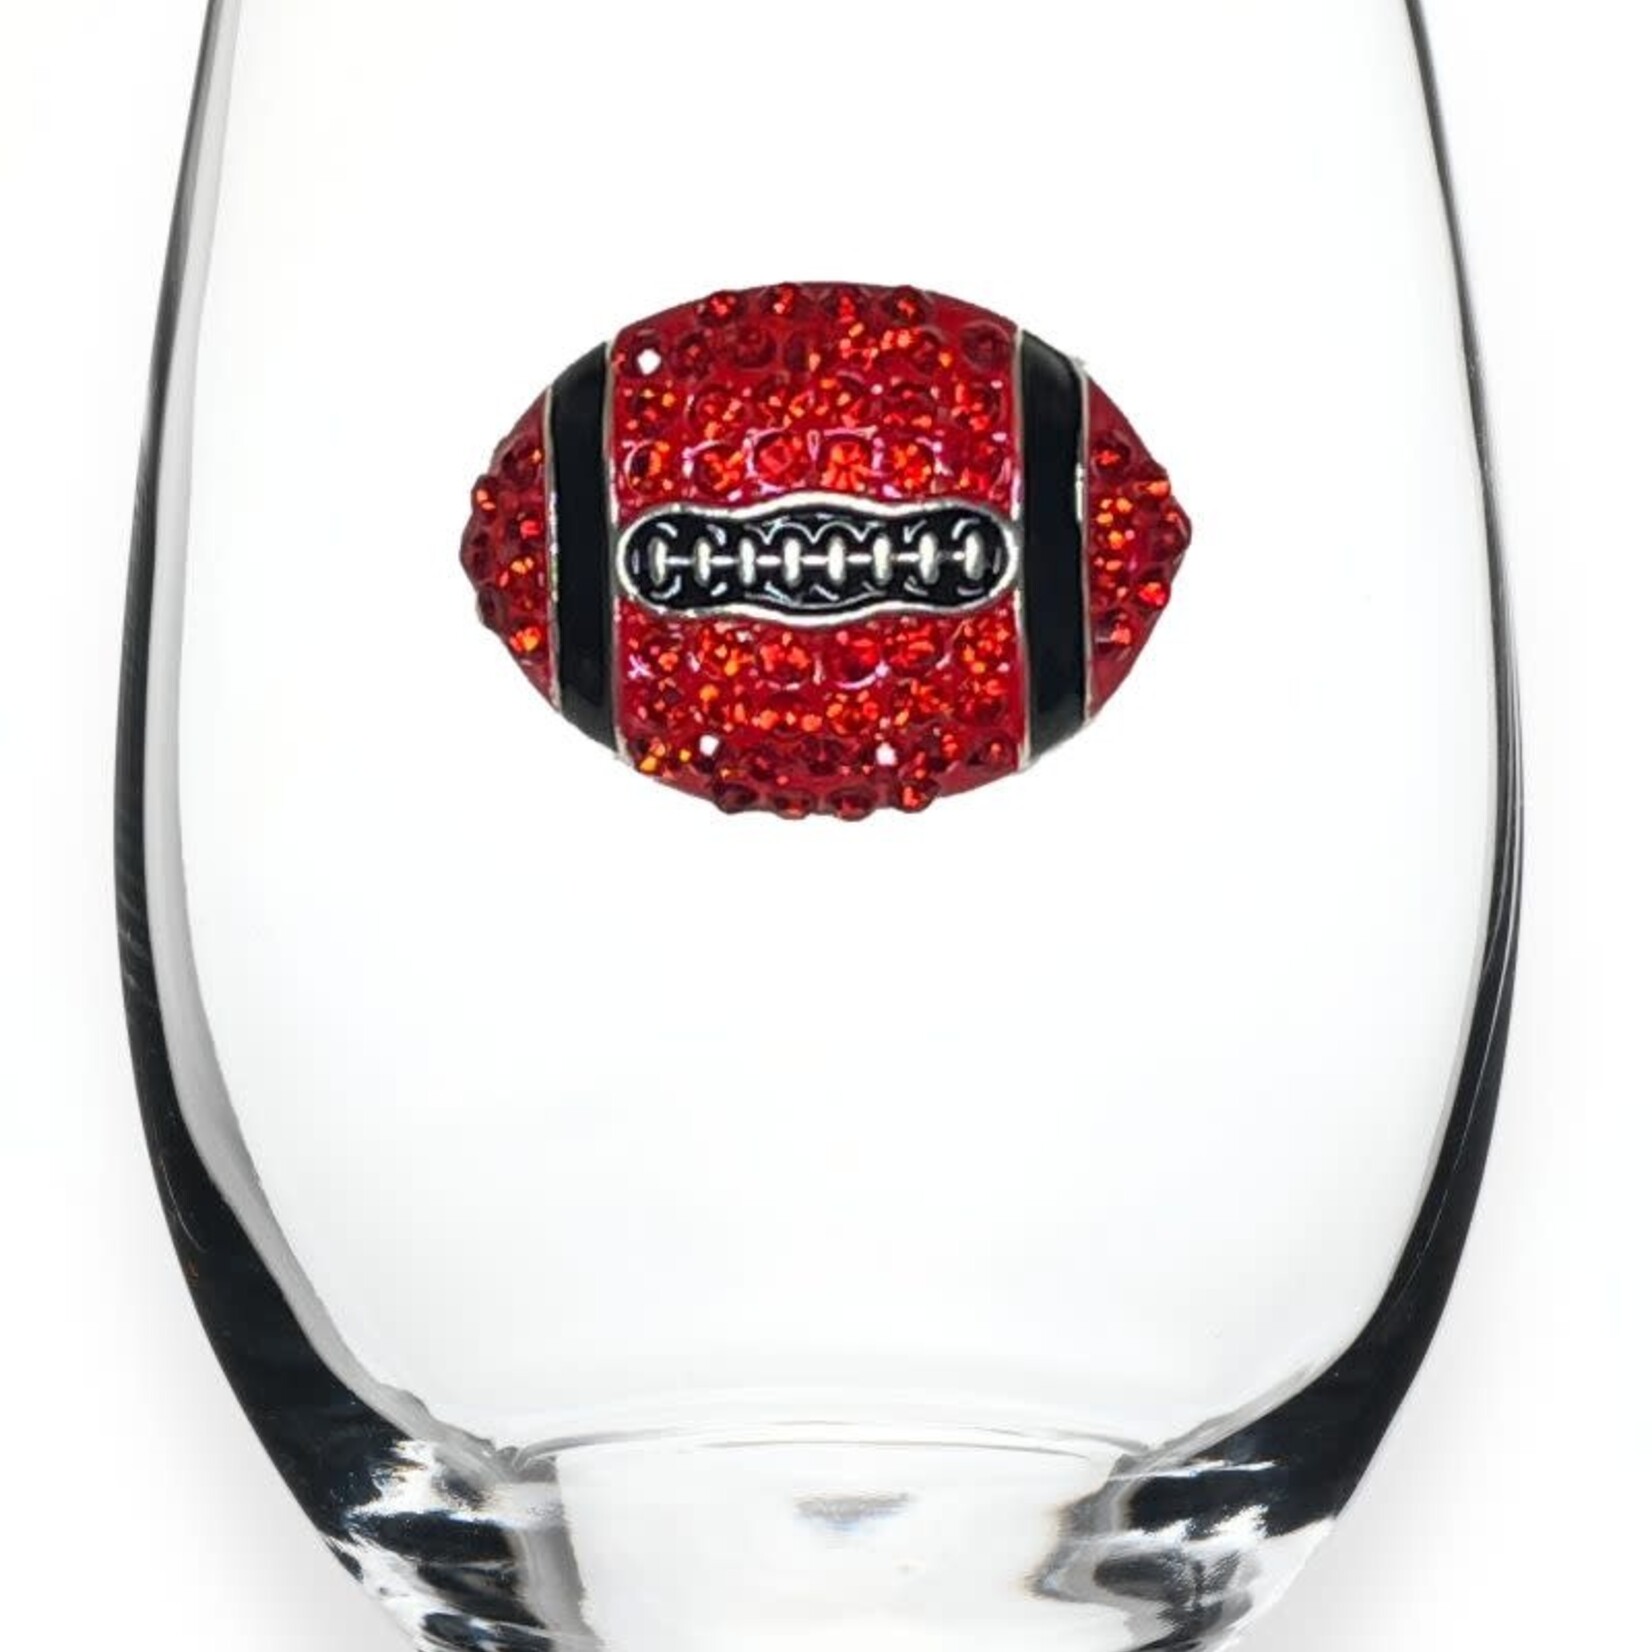 TheQueensJewels Stemless Jeweled Wine Glass